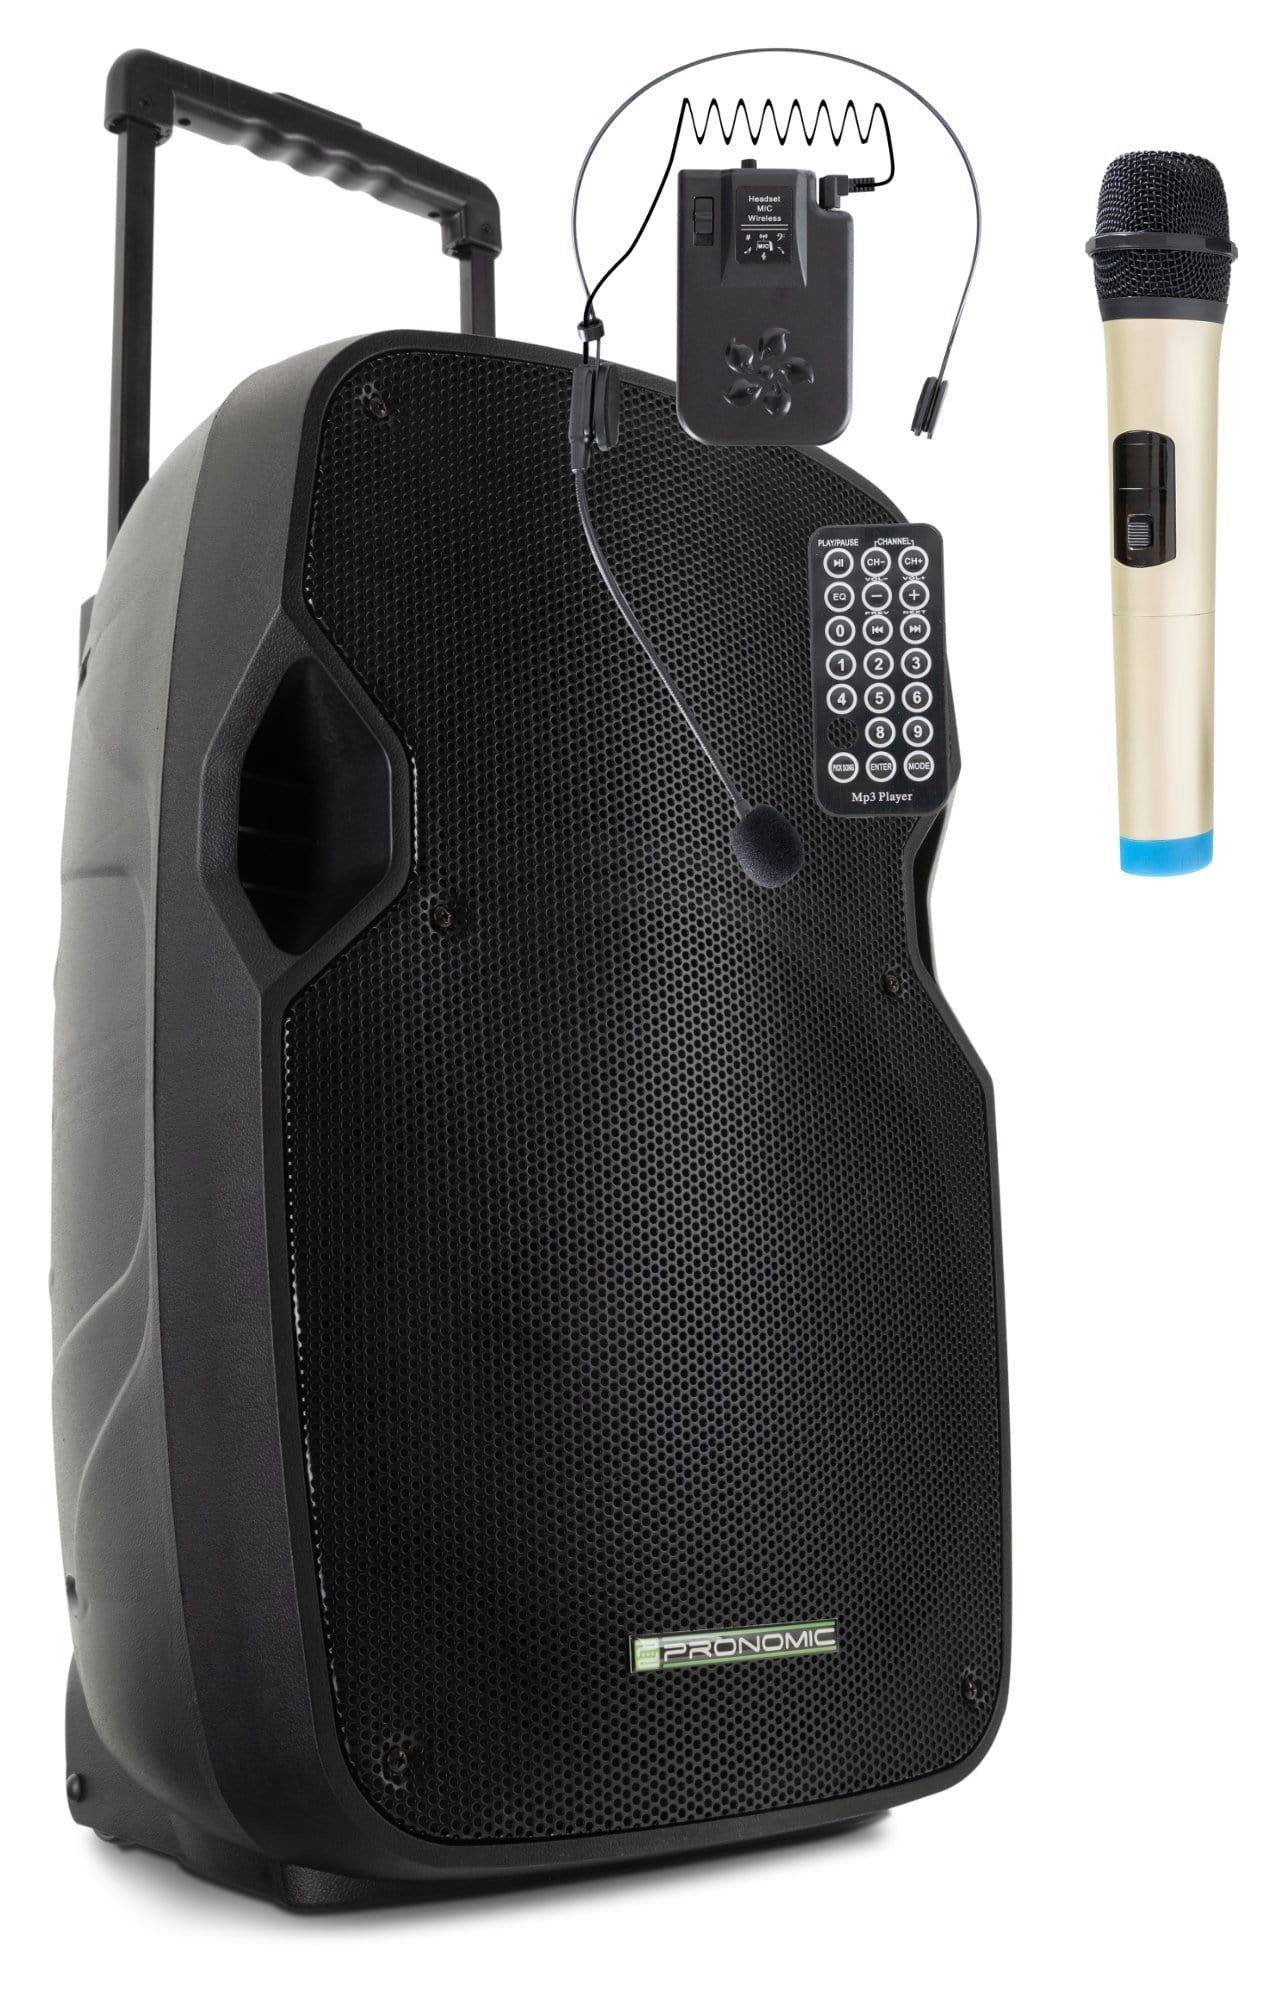 30 Headset) inkl. Akku-Aktivbox 12MA-A mit Soundanalage Lautsprecher & TWS (Bluetooth-Schnittstelle, W, Funktion Pronomic MOVE Mobile 12"-Woofer Funkmikrofon -